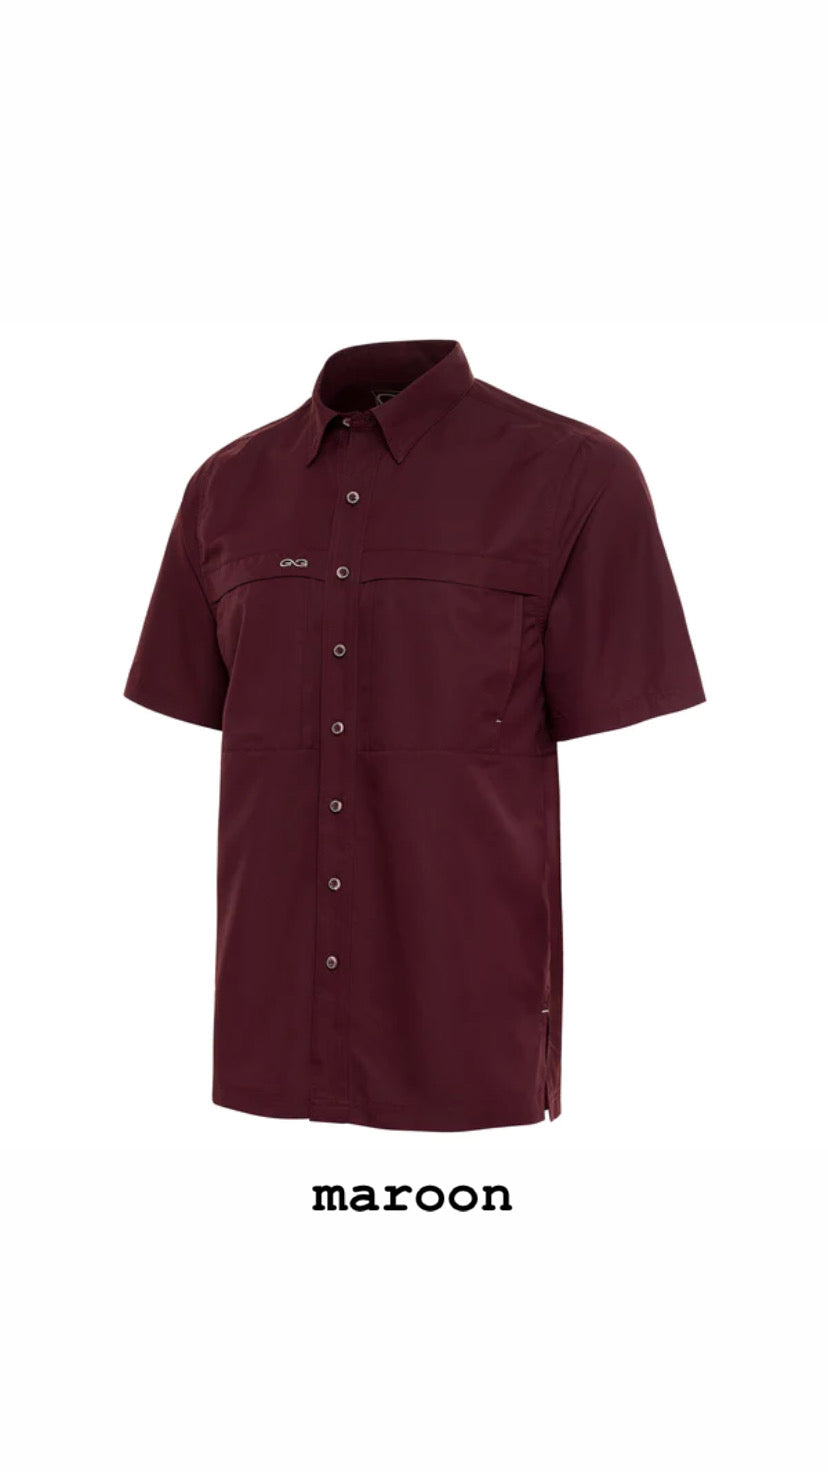 Game Guard Microfiber Short Sleeve Shirt (Pick Size First) Medium / Maroon